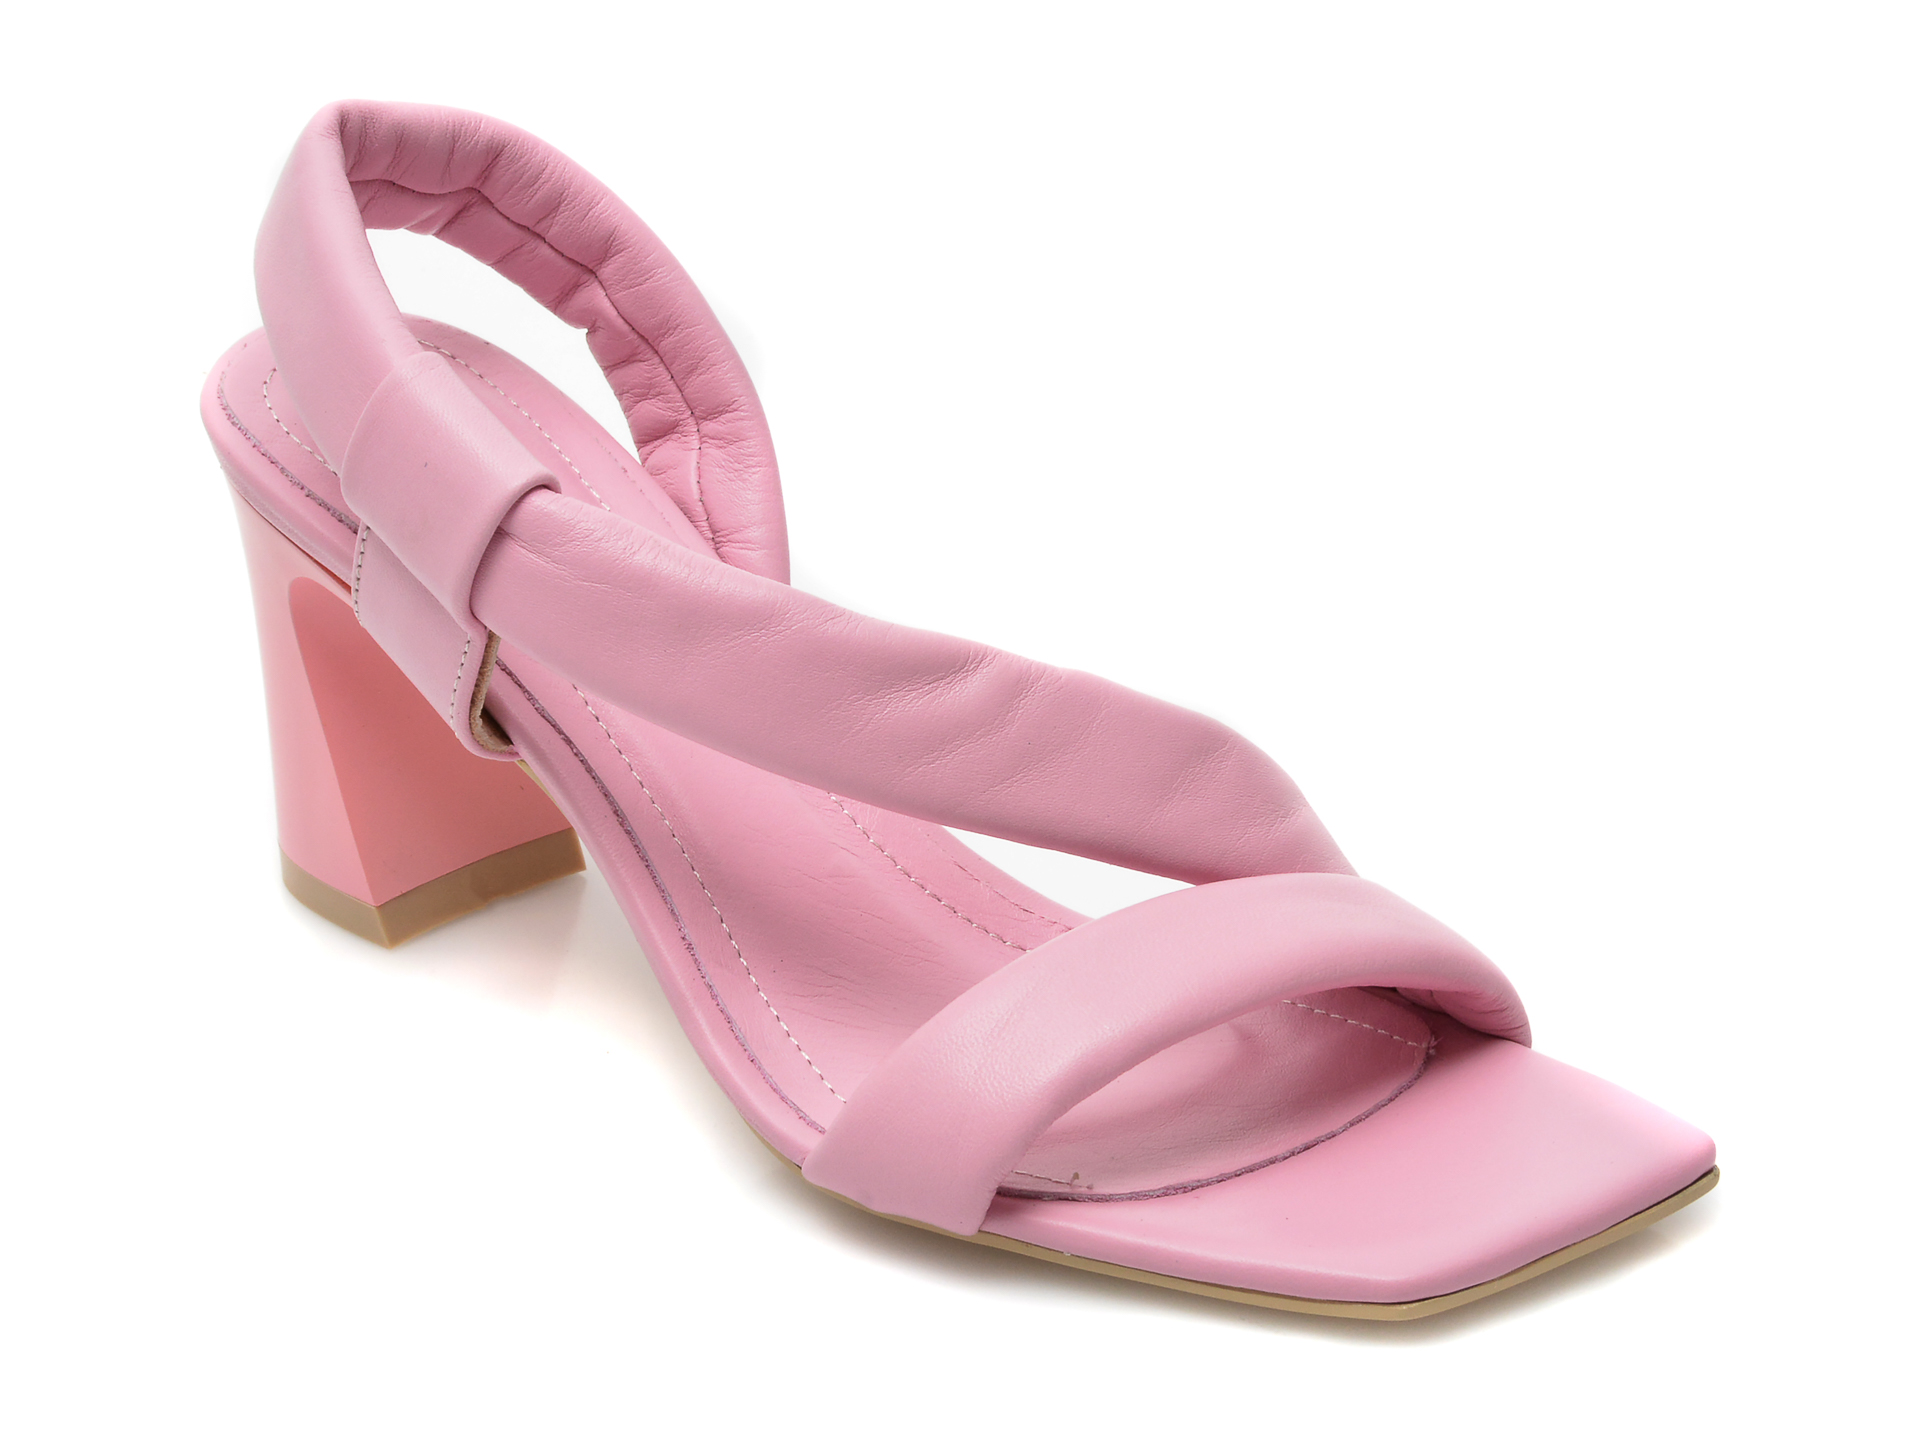 Sandale EPICA roz, 521, din piele naturala Epica